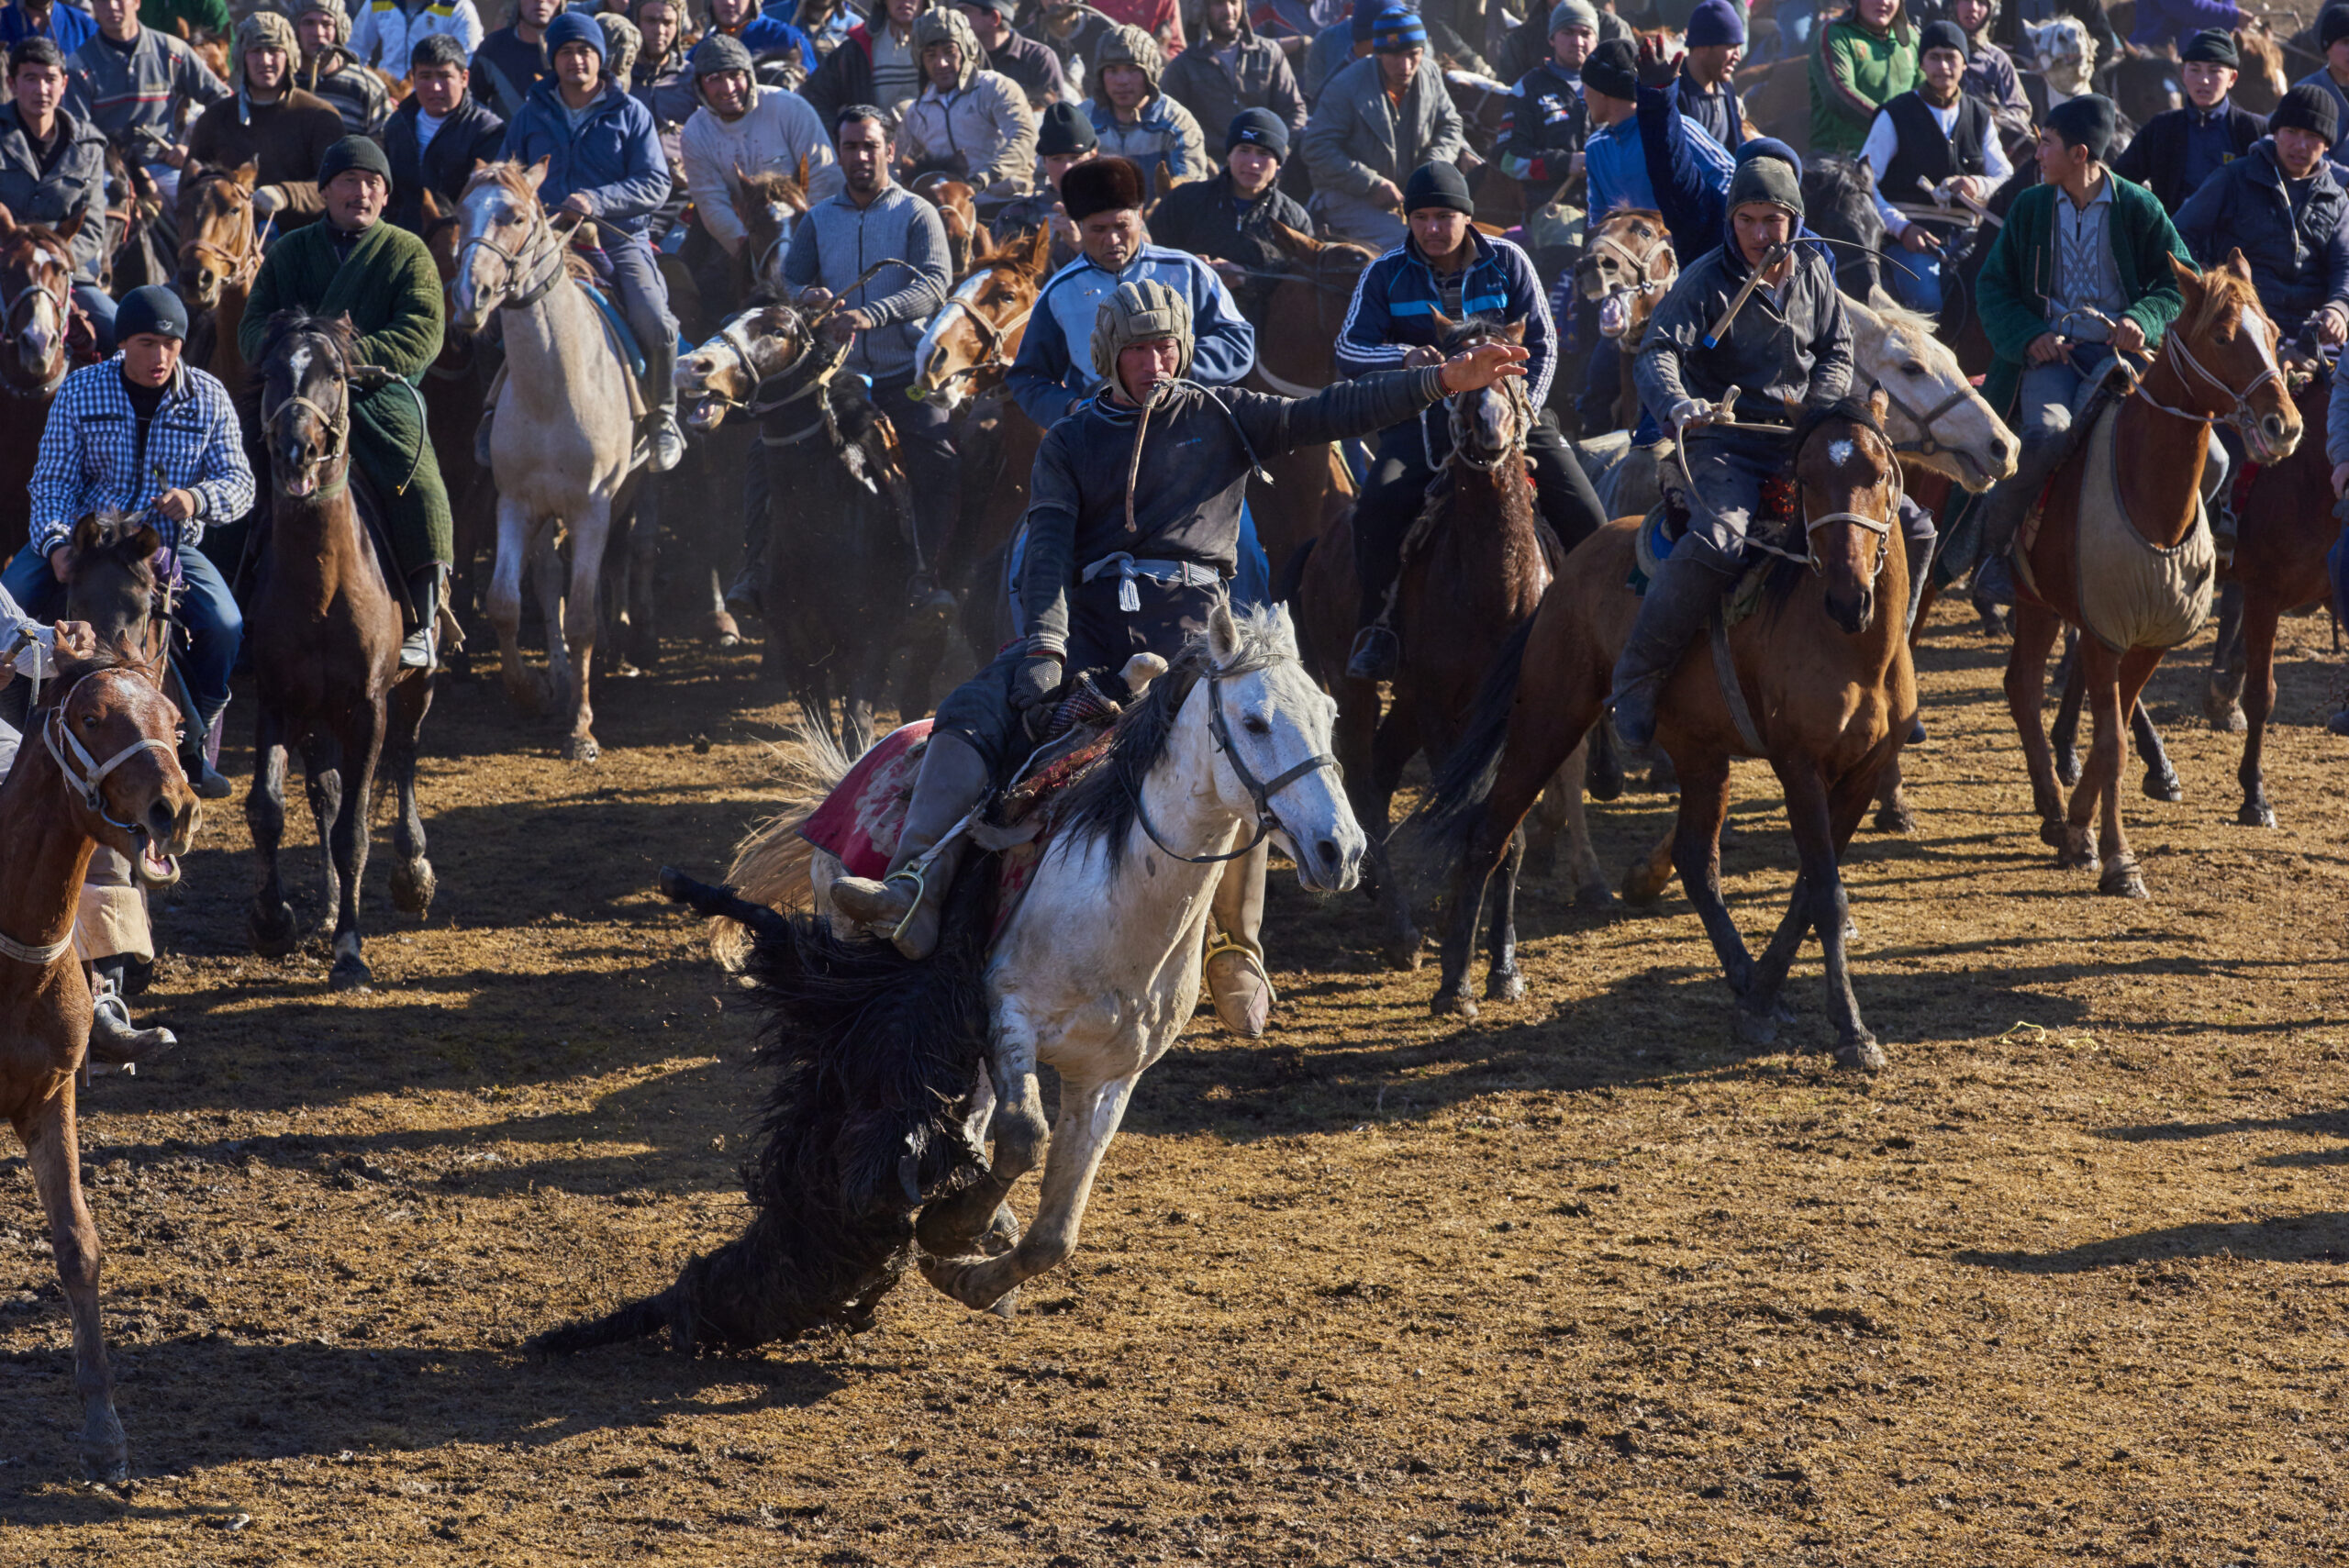 Uzbekistan, Kachka Daria province, Buzkashi game, horsemen fighting for a sheep body